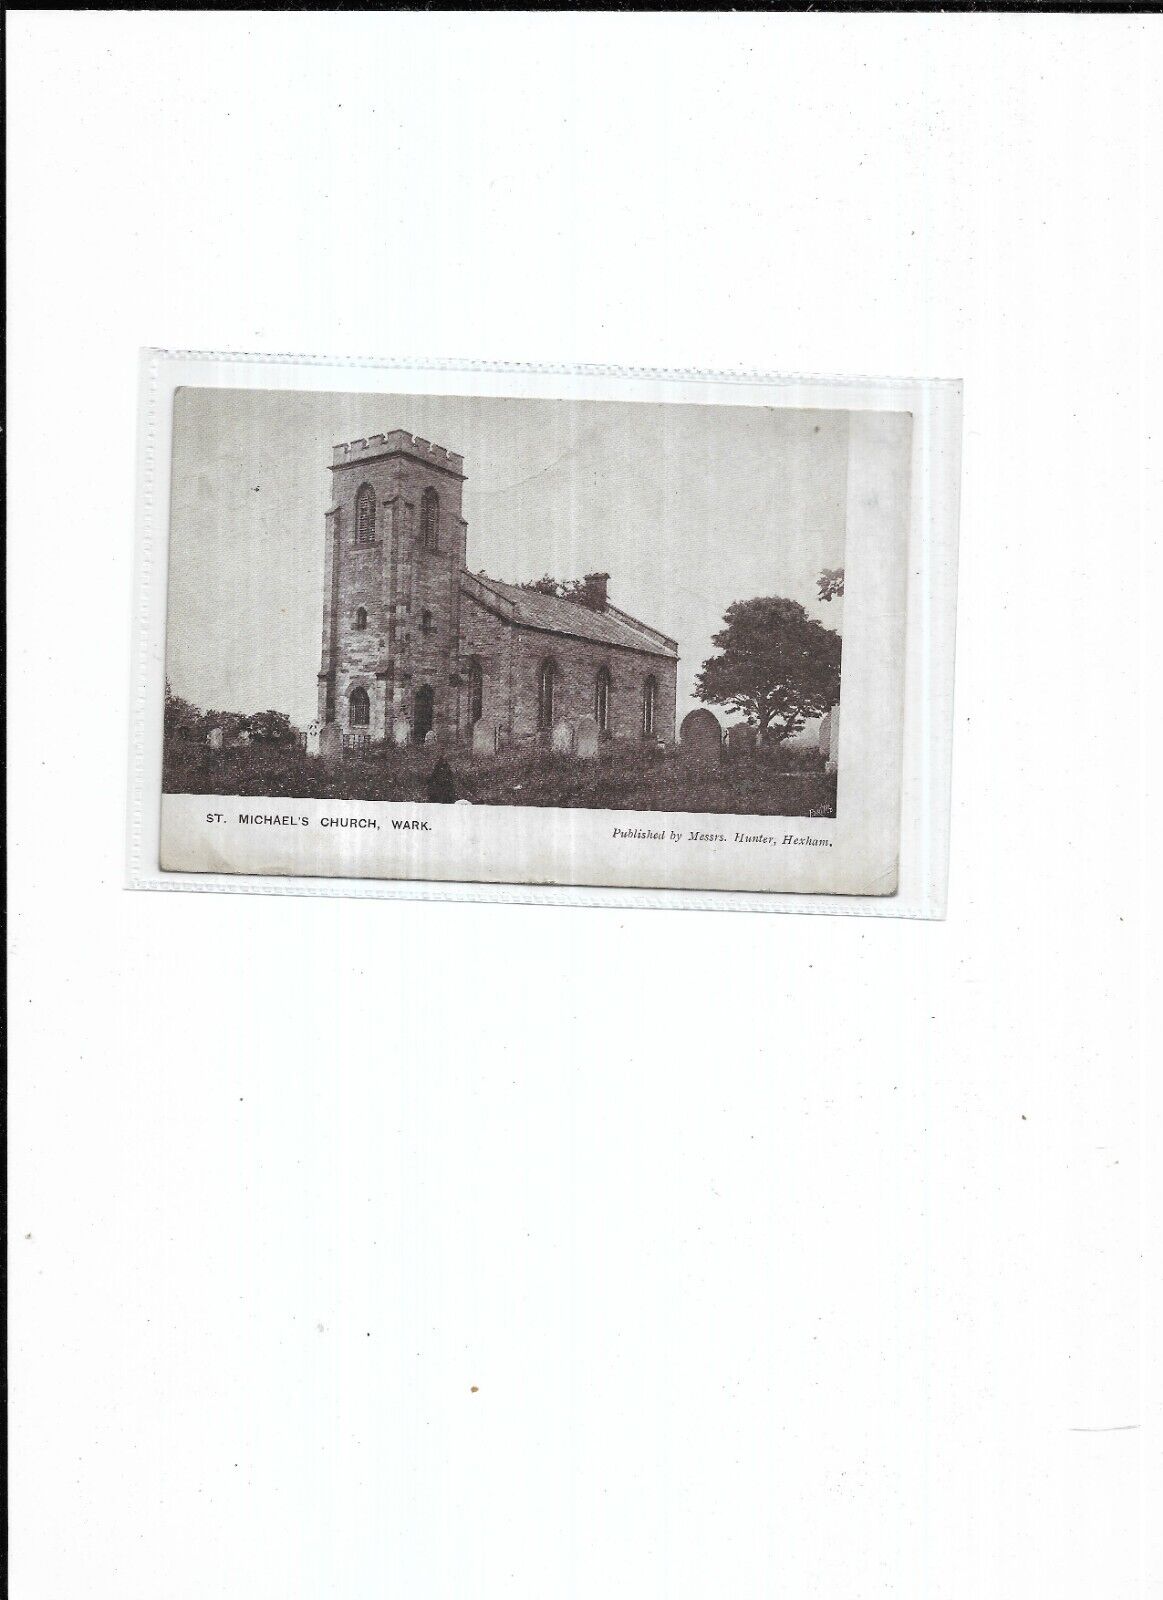 Northumberland Service "St Michael's Church, Wark" POstmarked 1910